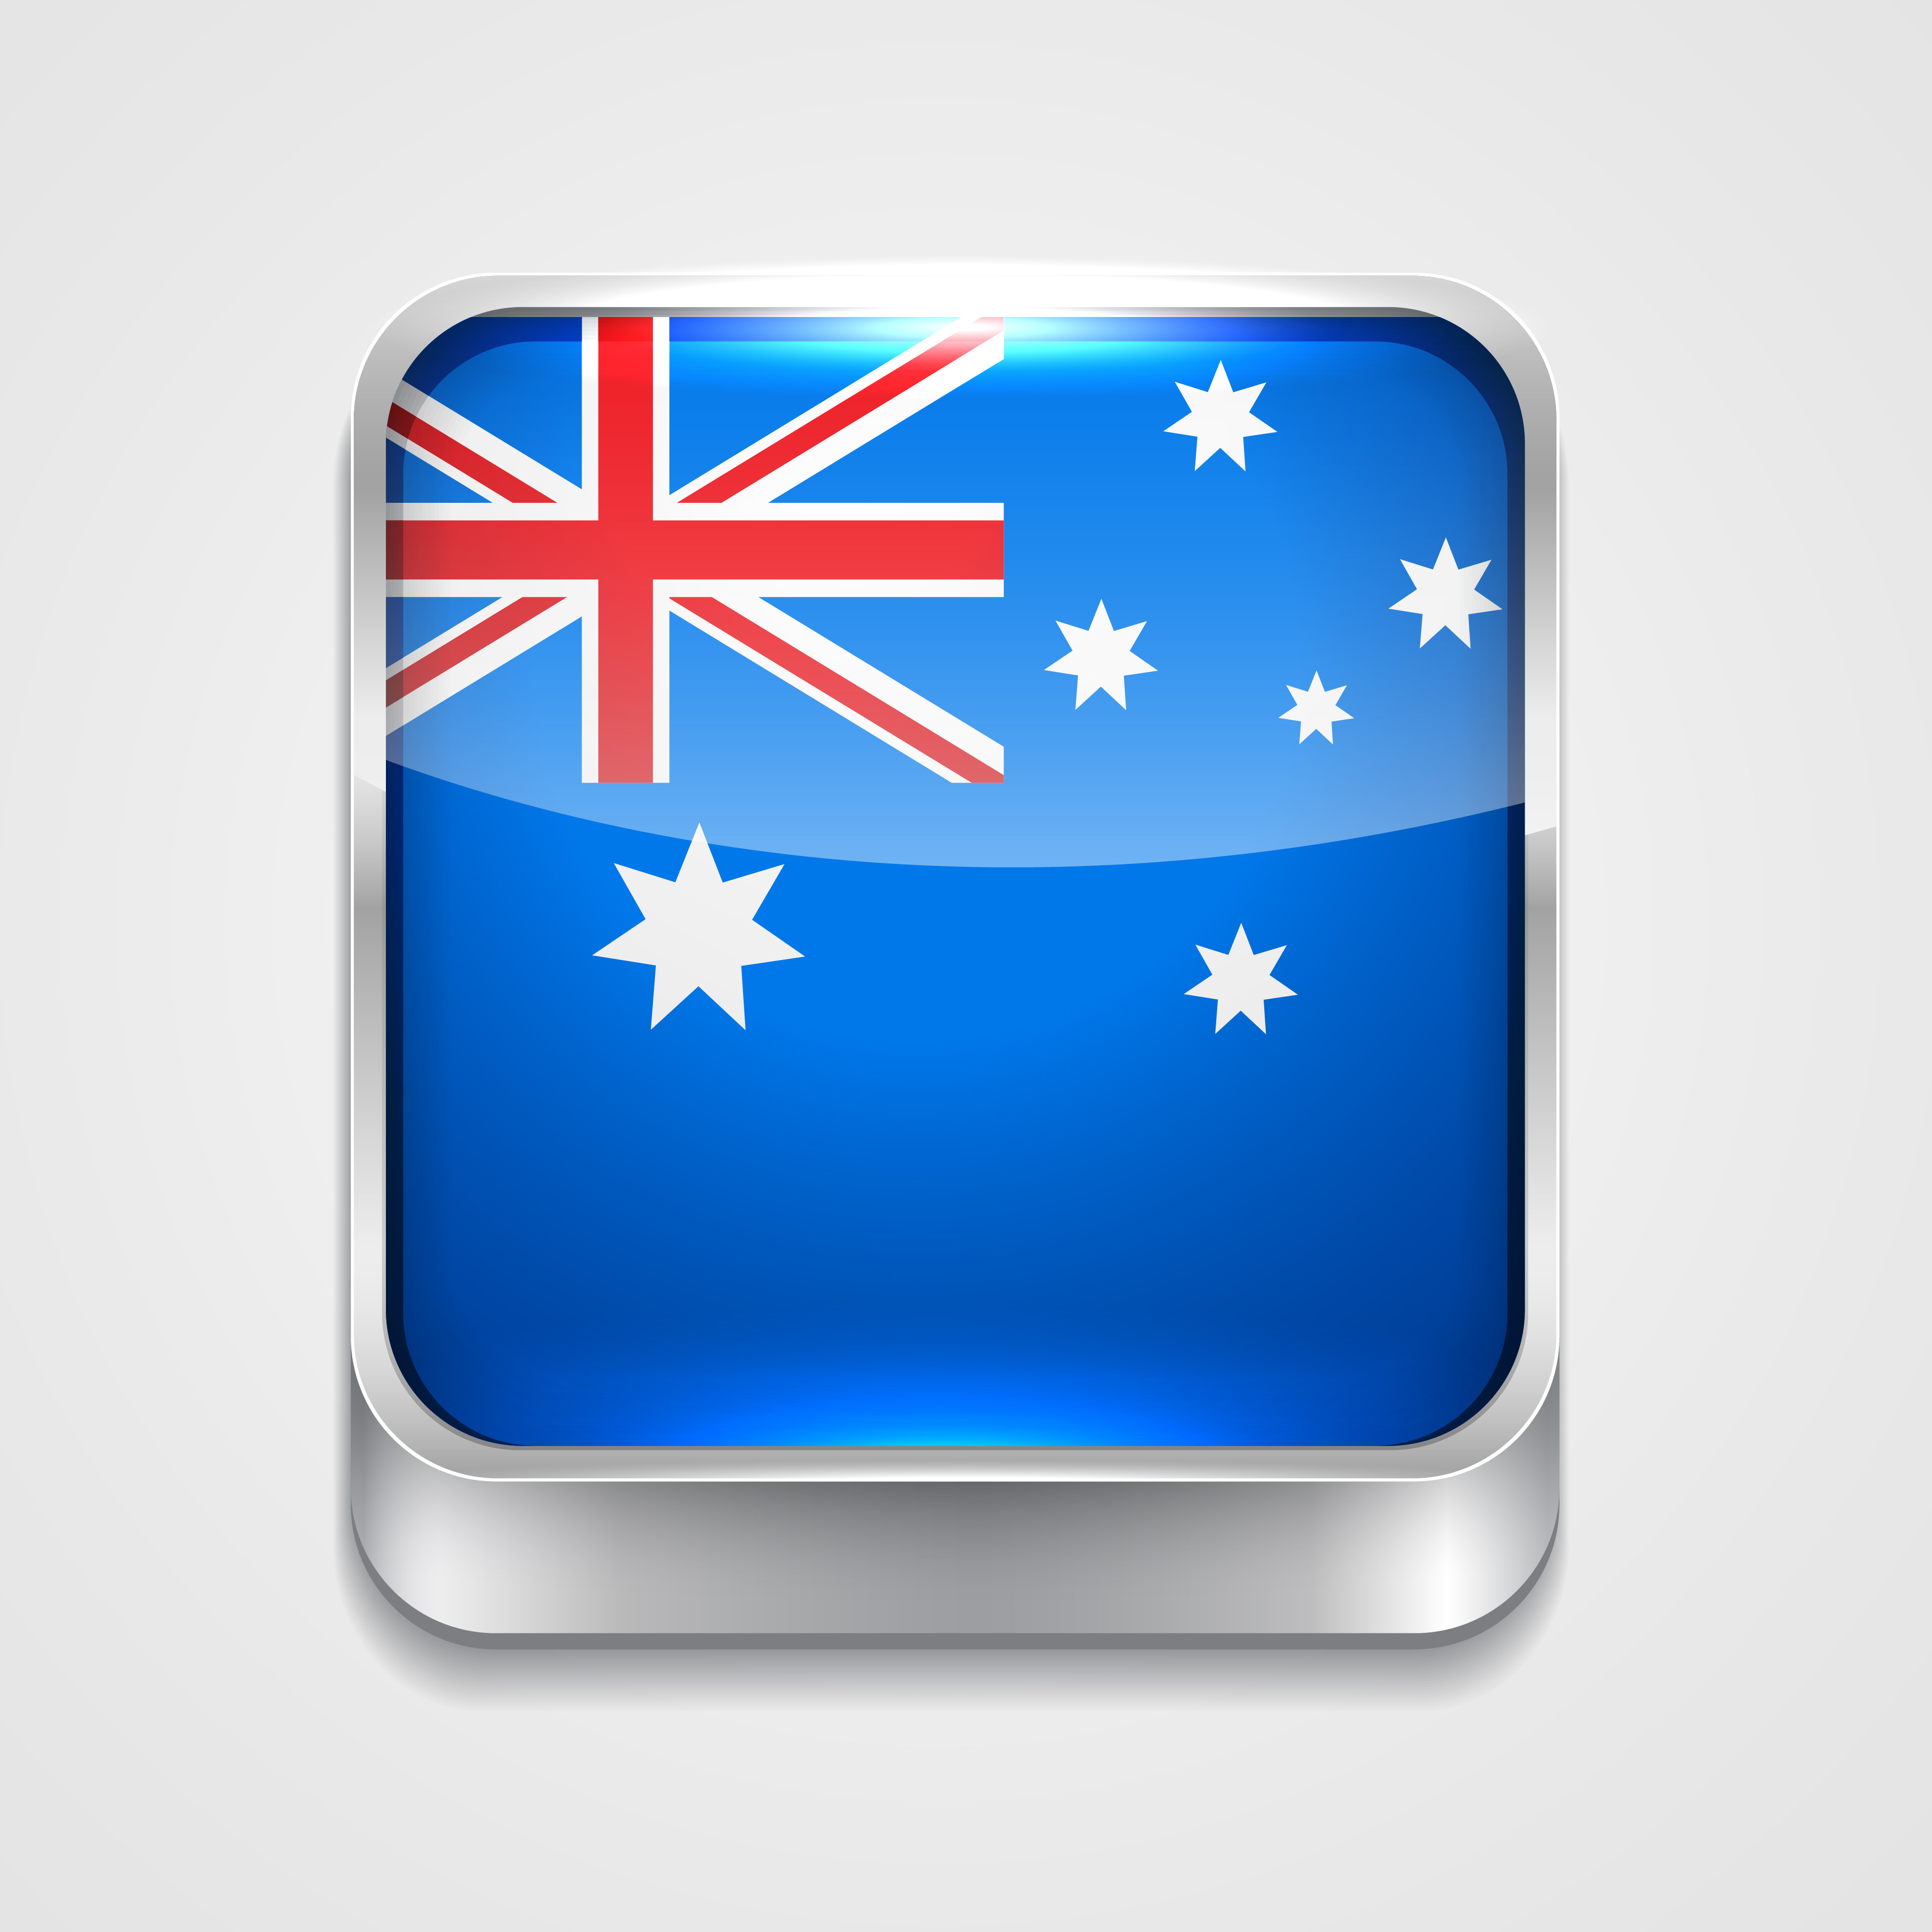 Download Australia Flag Free Vector Art - (3173 Free Downloads)